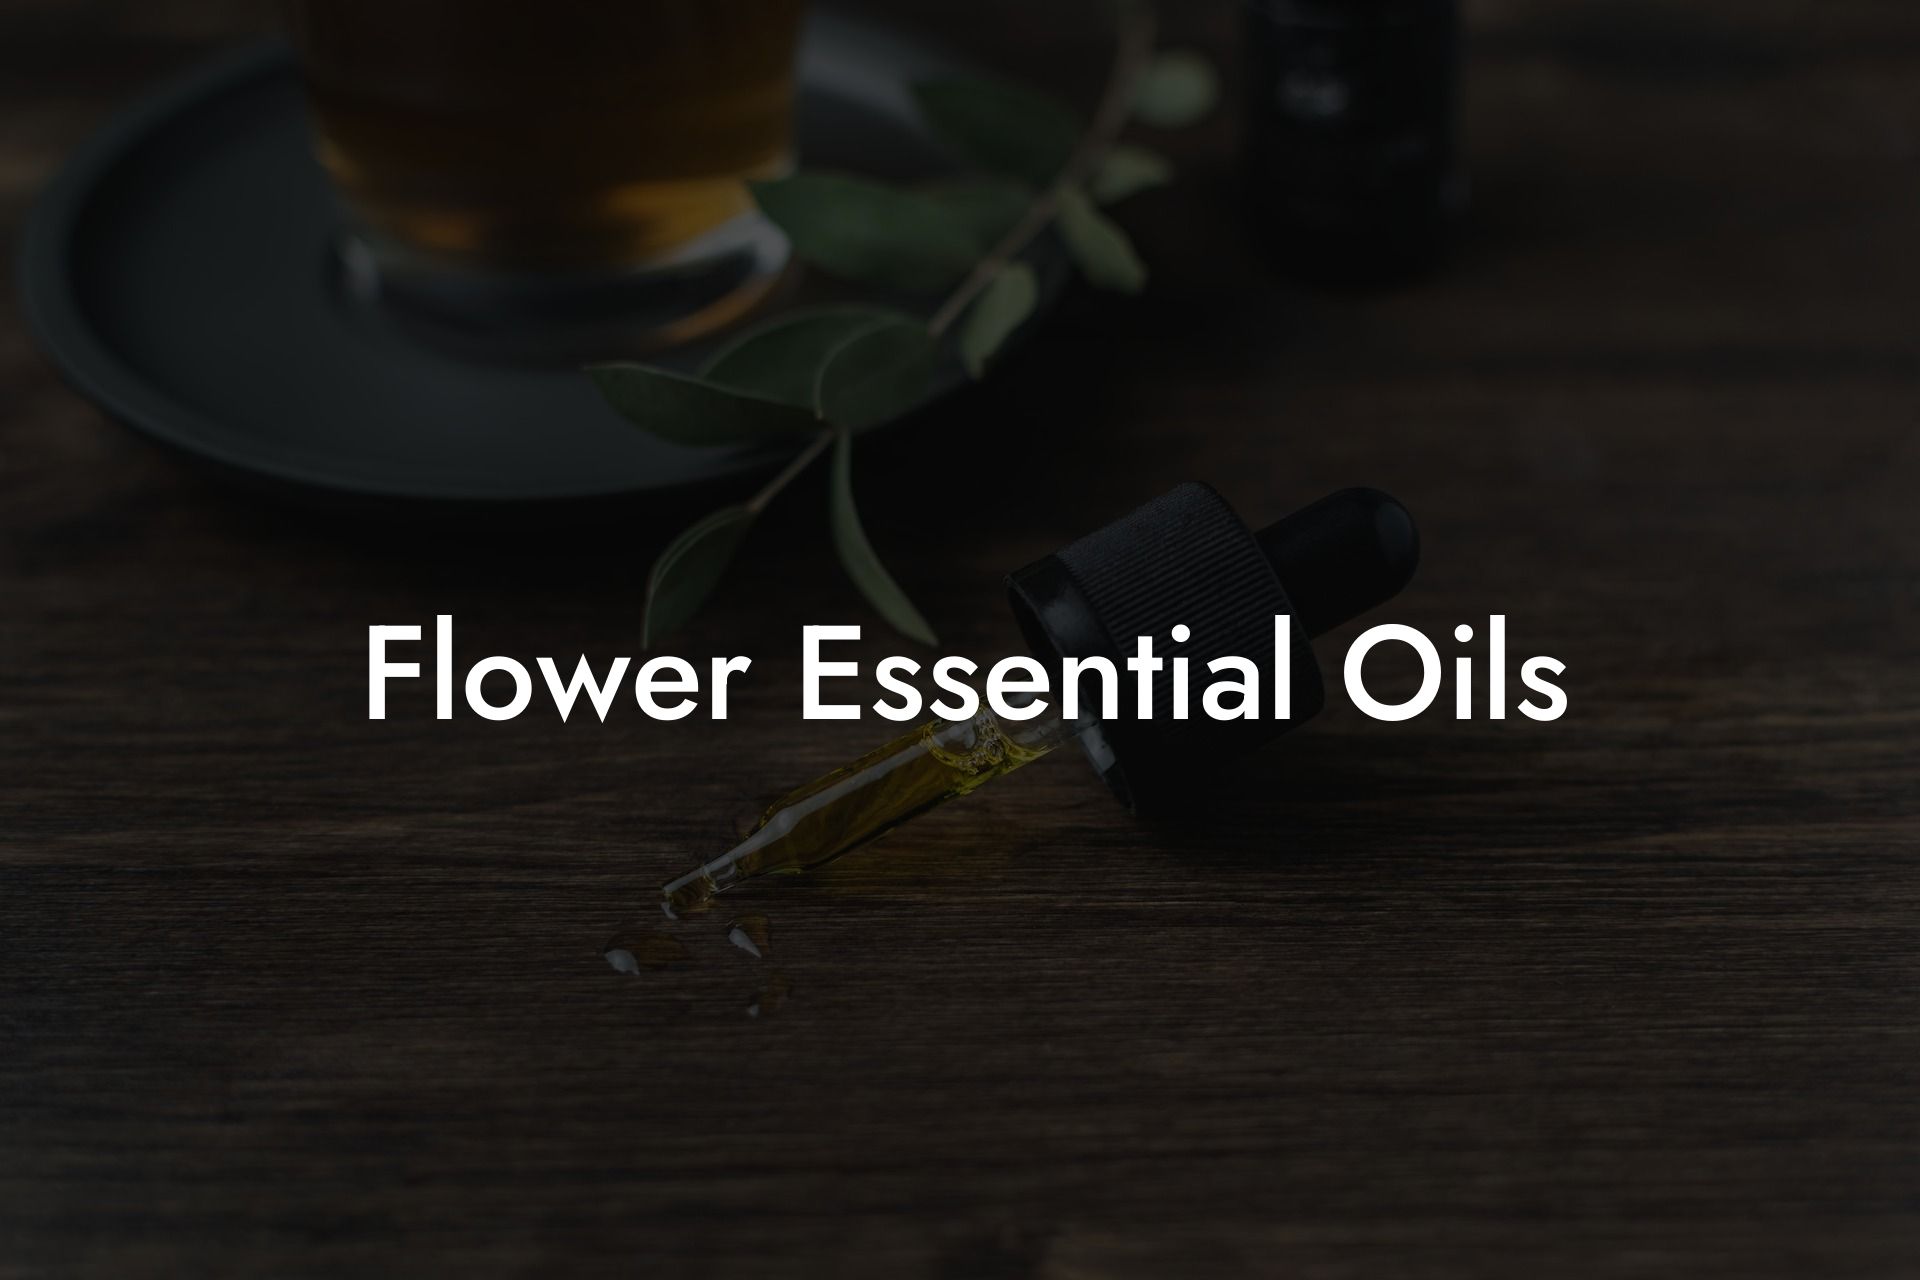 Flower Essential Oils